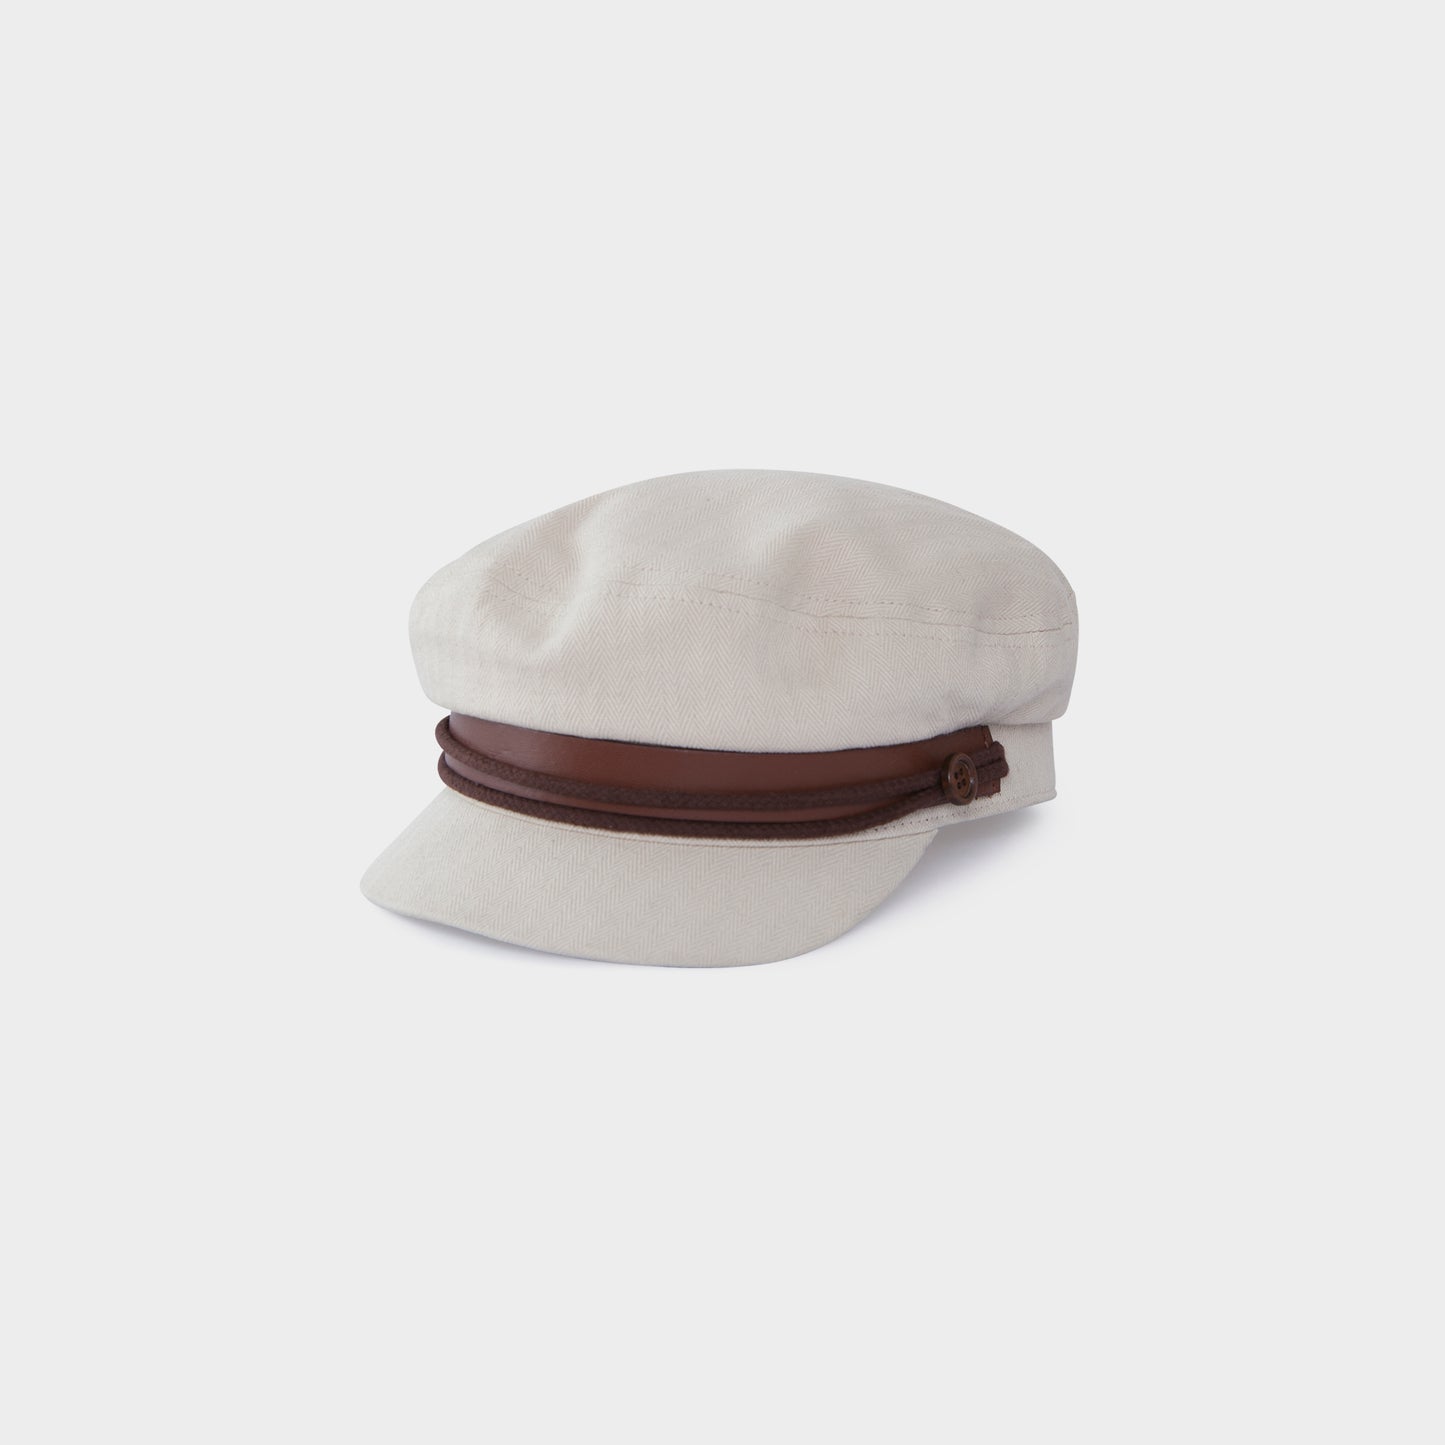 The Darwin Hat